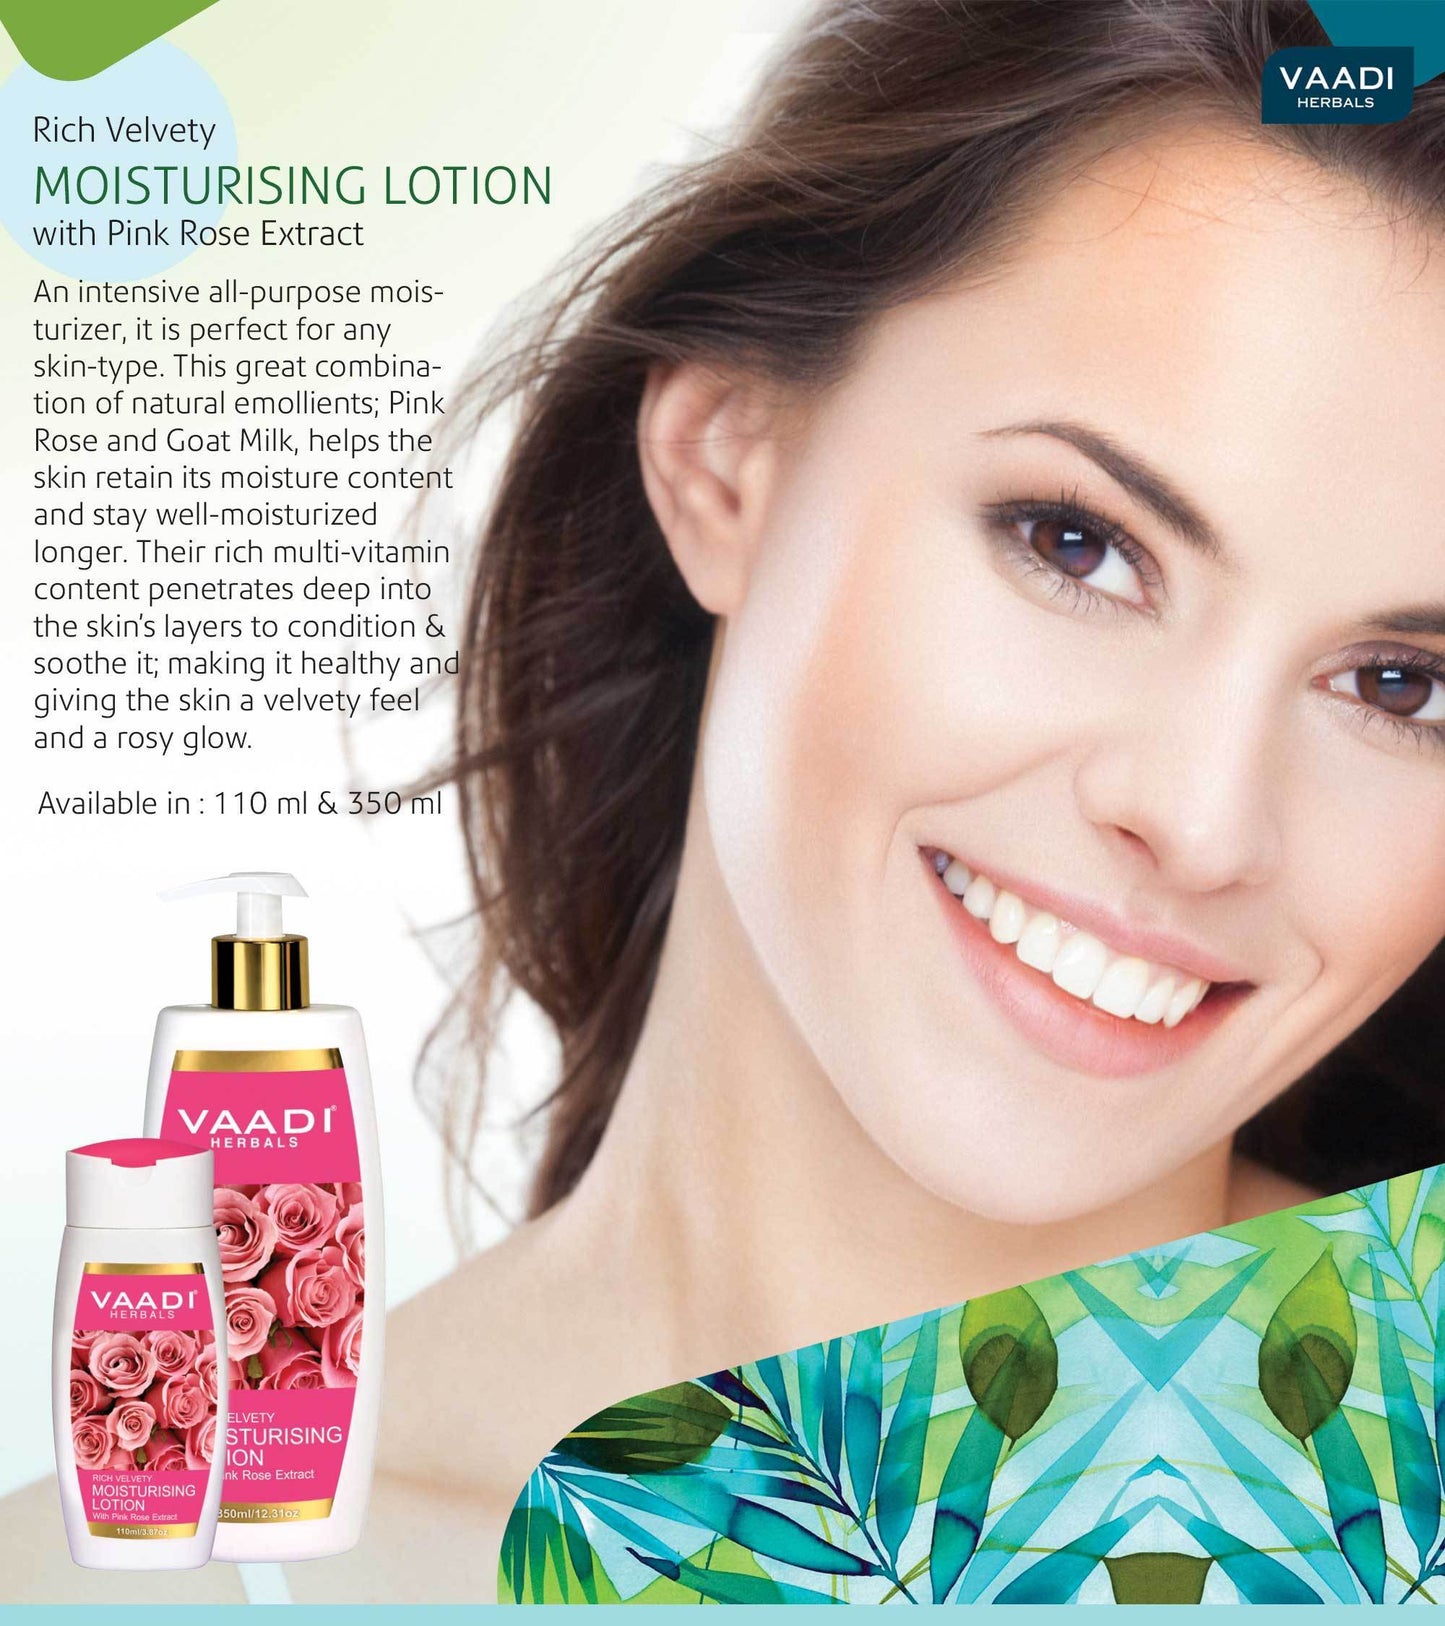 Organic Rich Velvety Moisturising Lotion with Pink Rose Extract - Retains Moisture in Skin - Makes Skin Velvety Soft (3 x 110 ml / 4 fl oz)